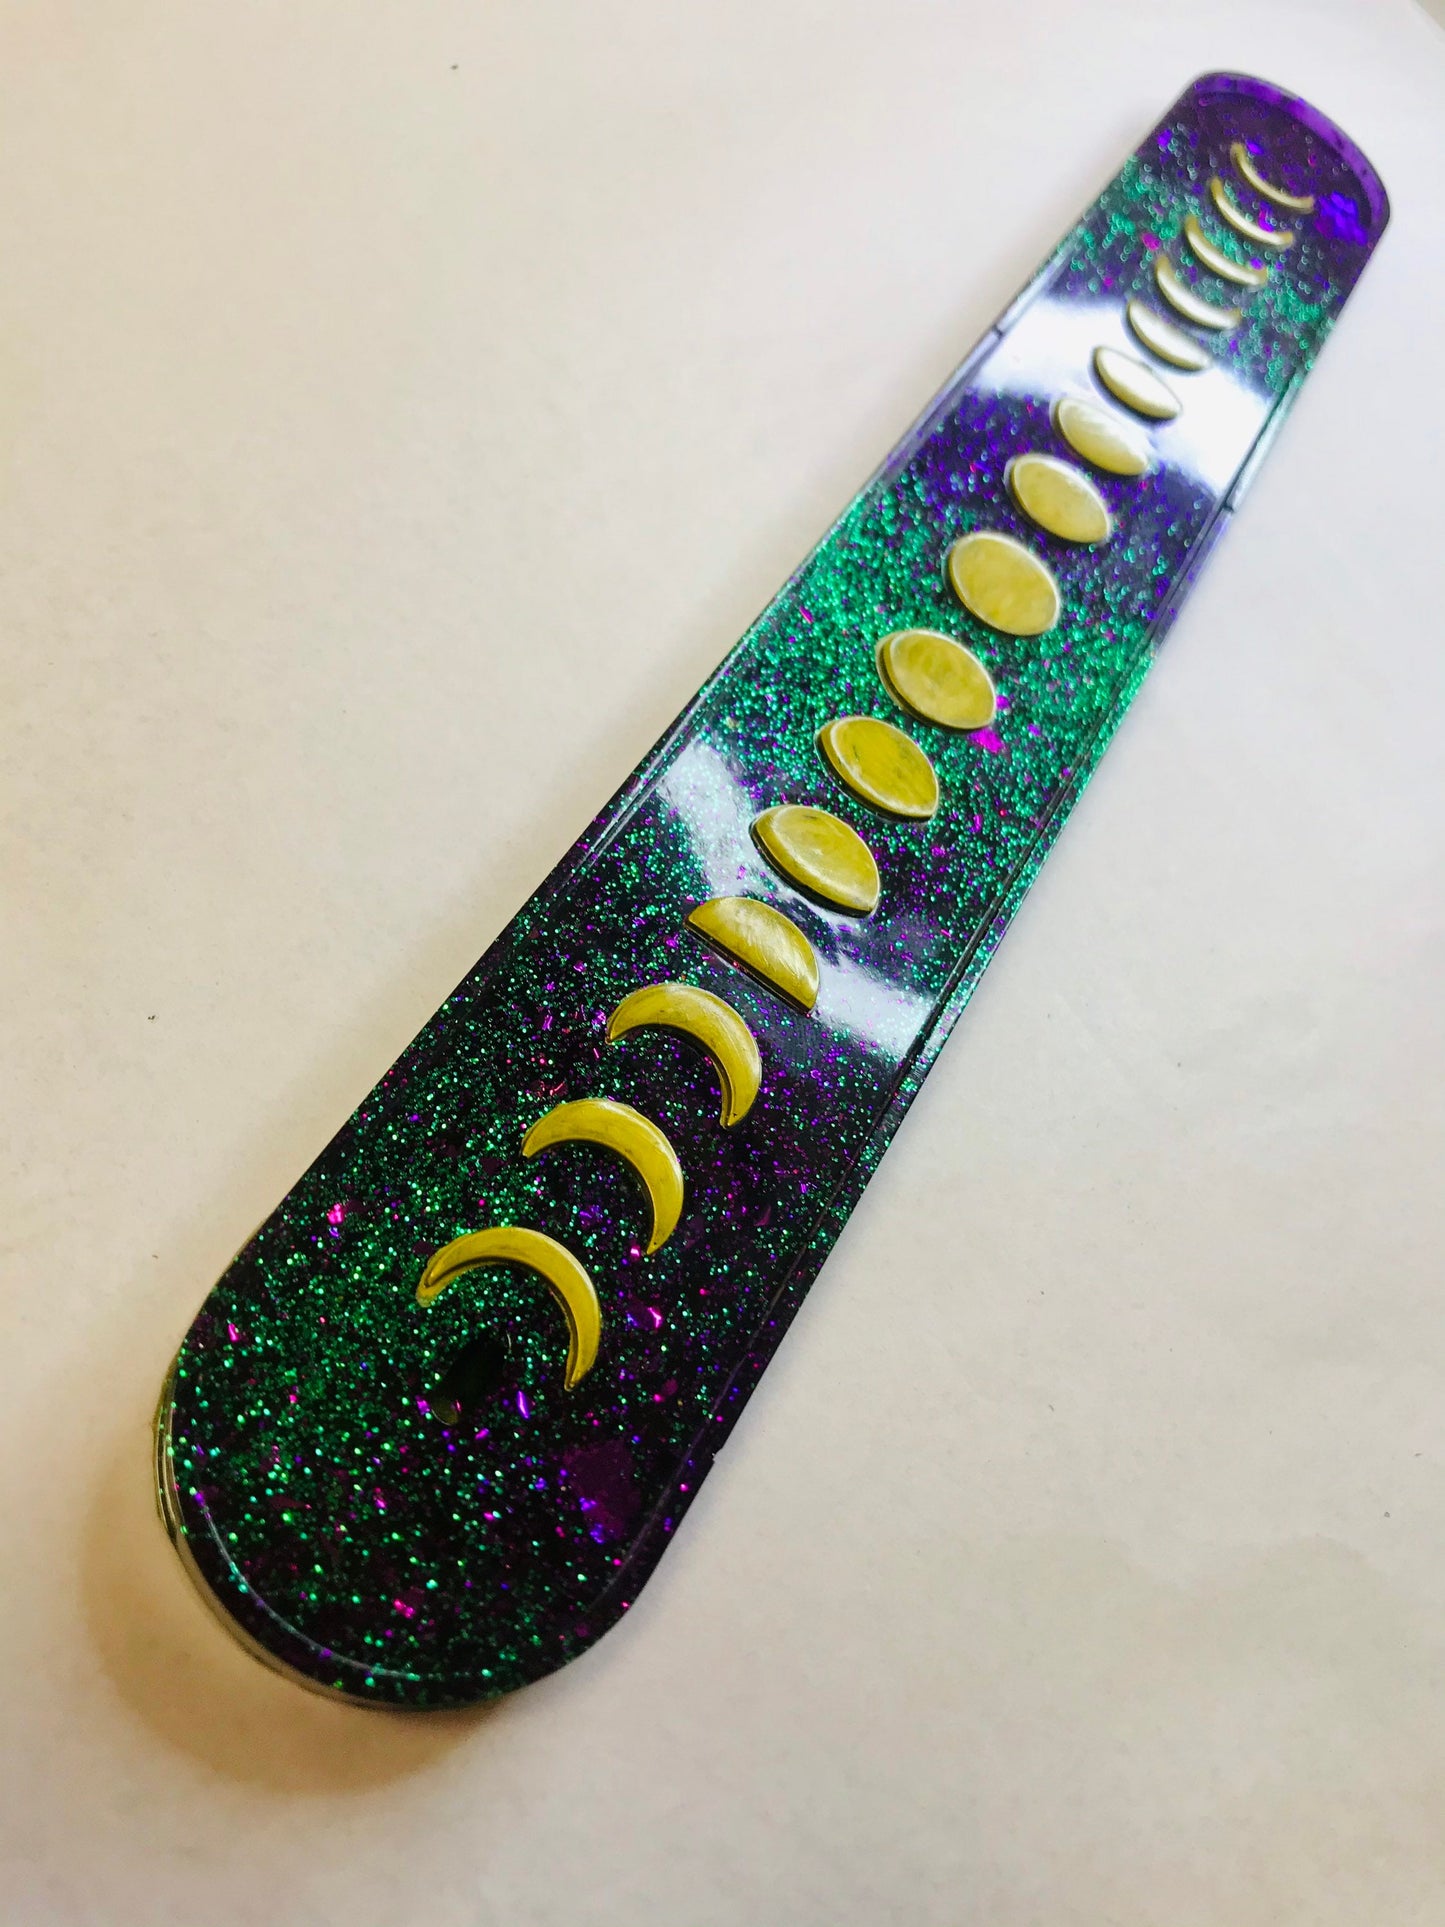 Lunar Incense Stick Burner, Purple and Green Resin Incense Holder, Moon Phases - Custom / Made to Order